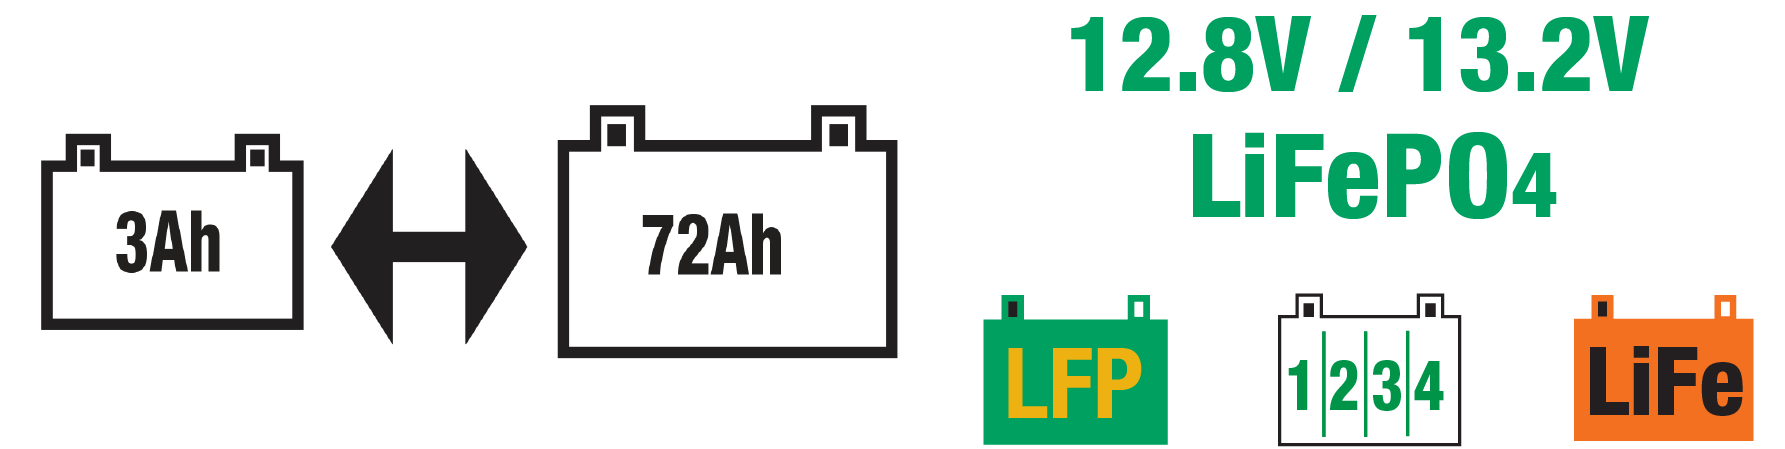 optimate lithium battery charger battery range: 3ah-72ah 12.8V/13.2V LiFePO4 LFP Lithium batteries